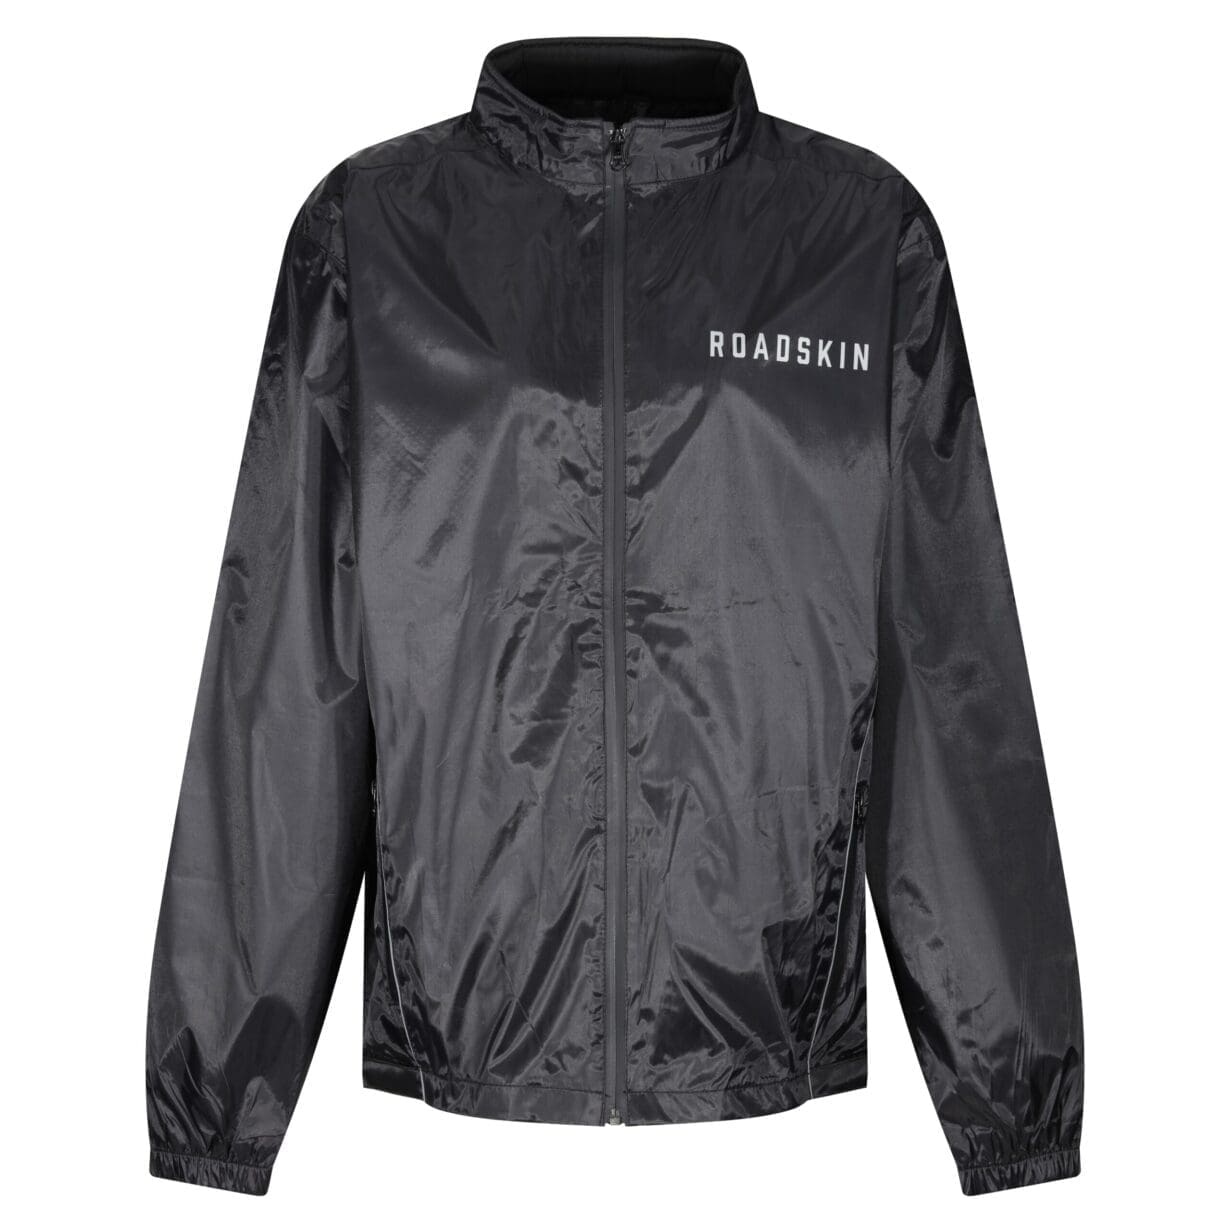 KIT: New waterproof jacket from Roadskin | MoreBikes